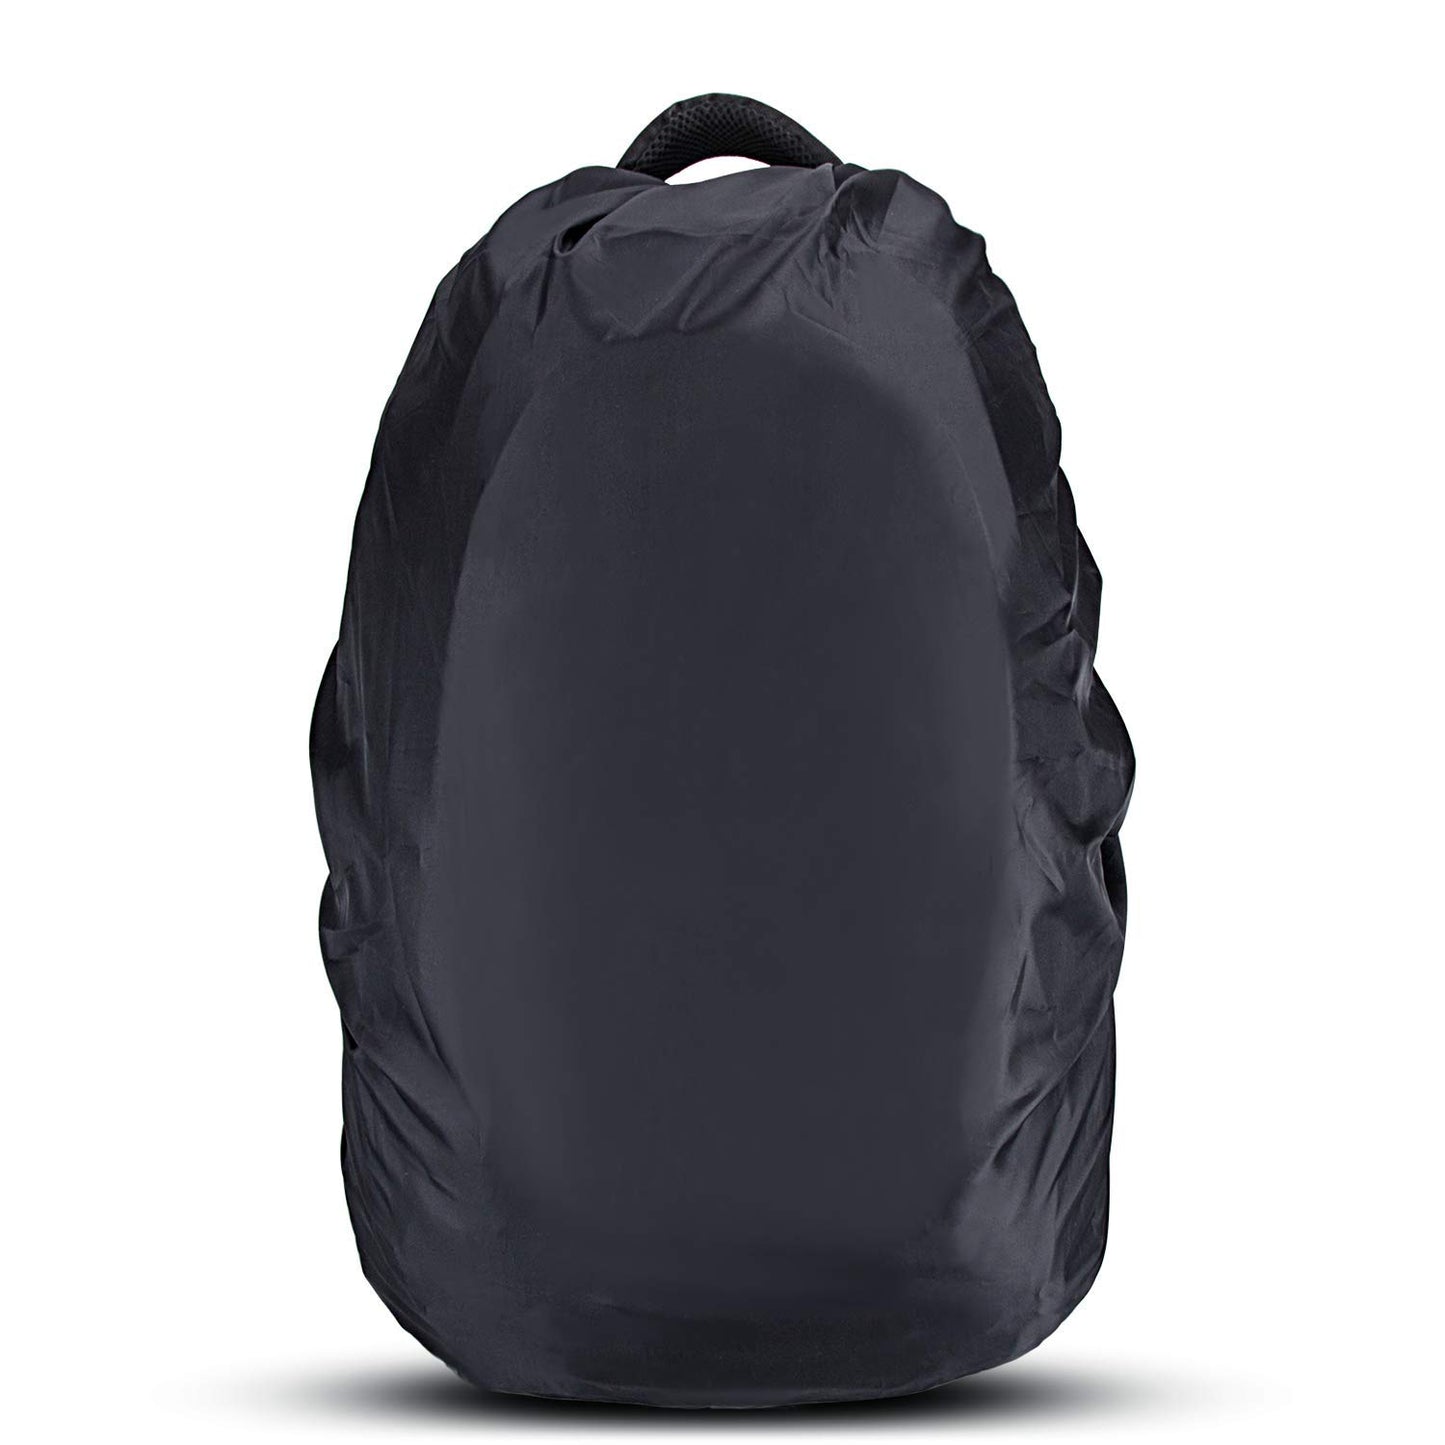 AutoFurnish  Waterproof Backpack Rain Cover - Black